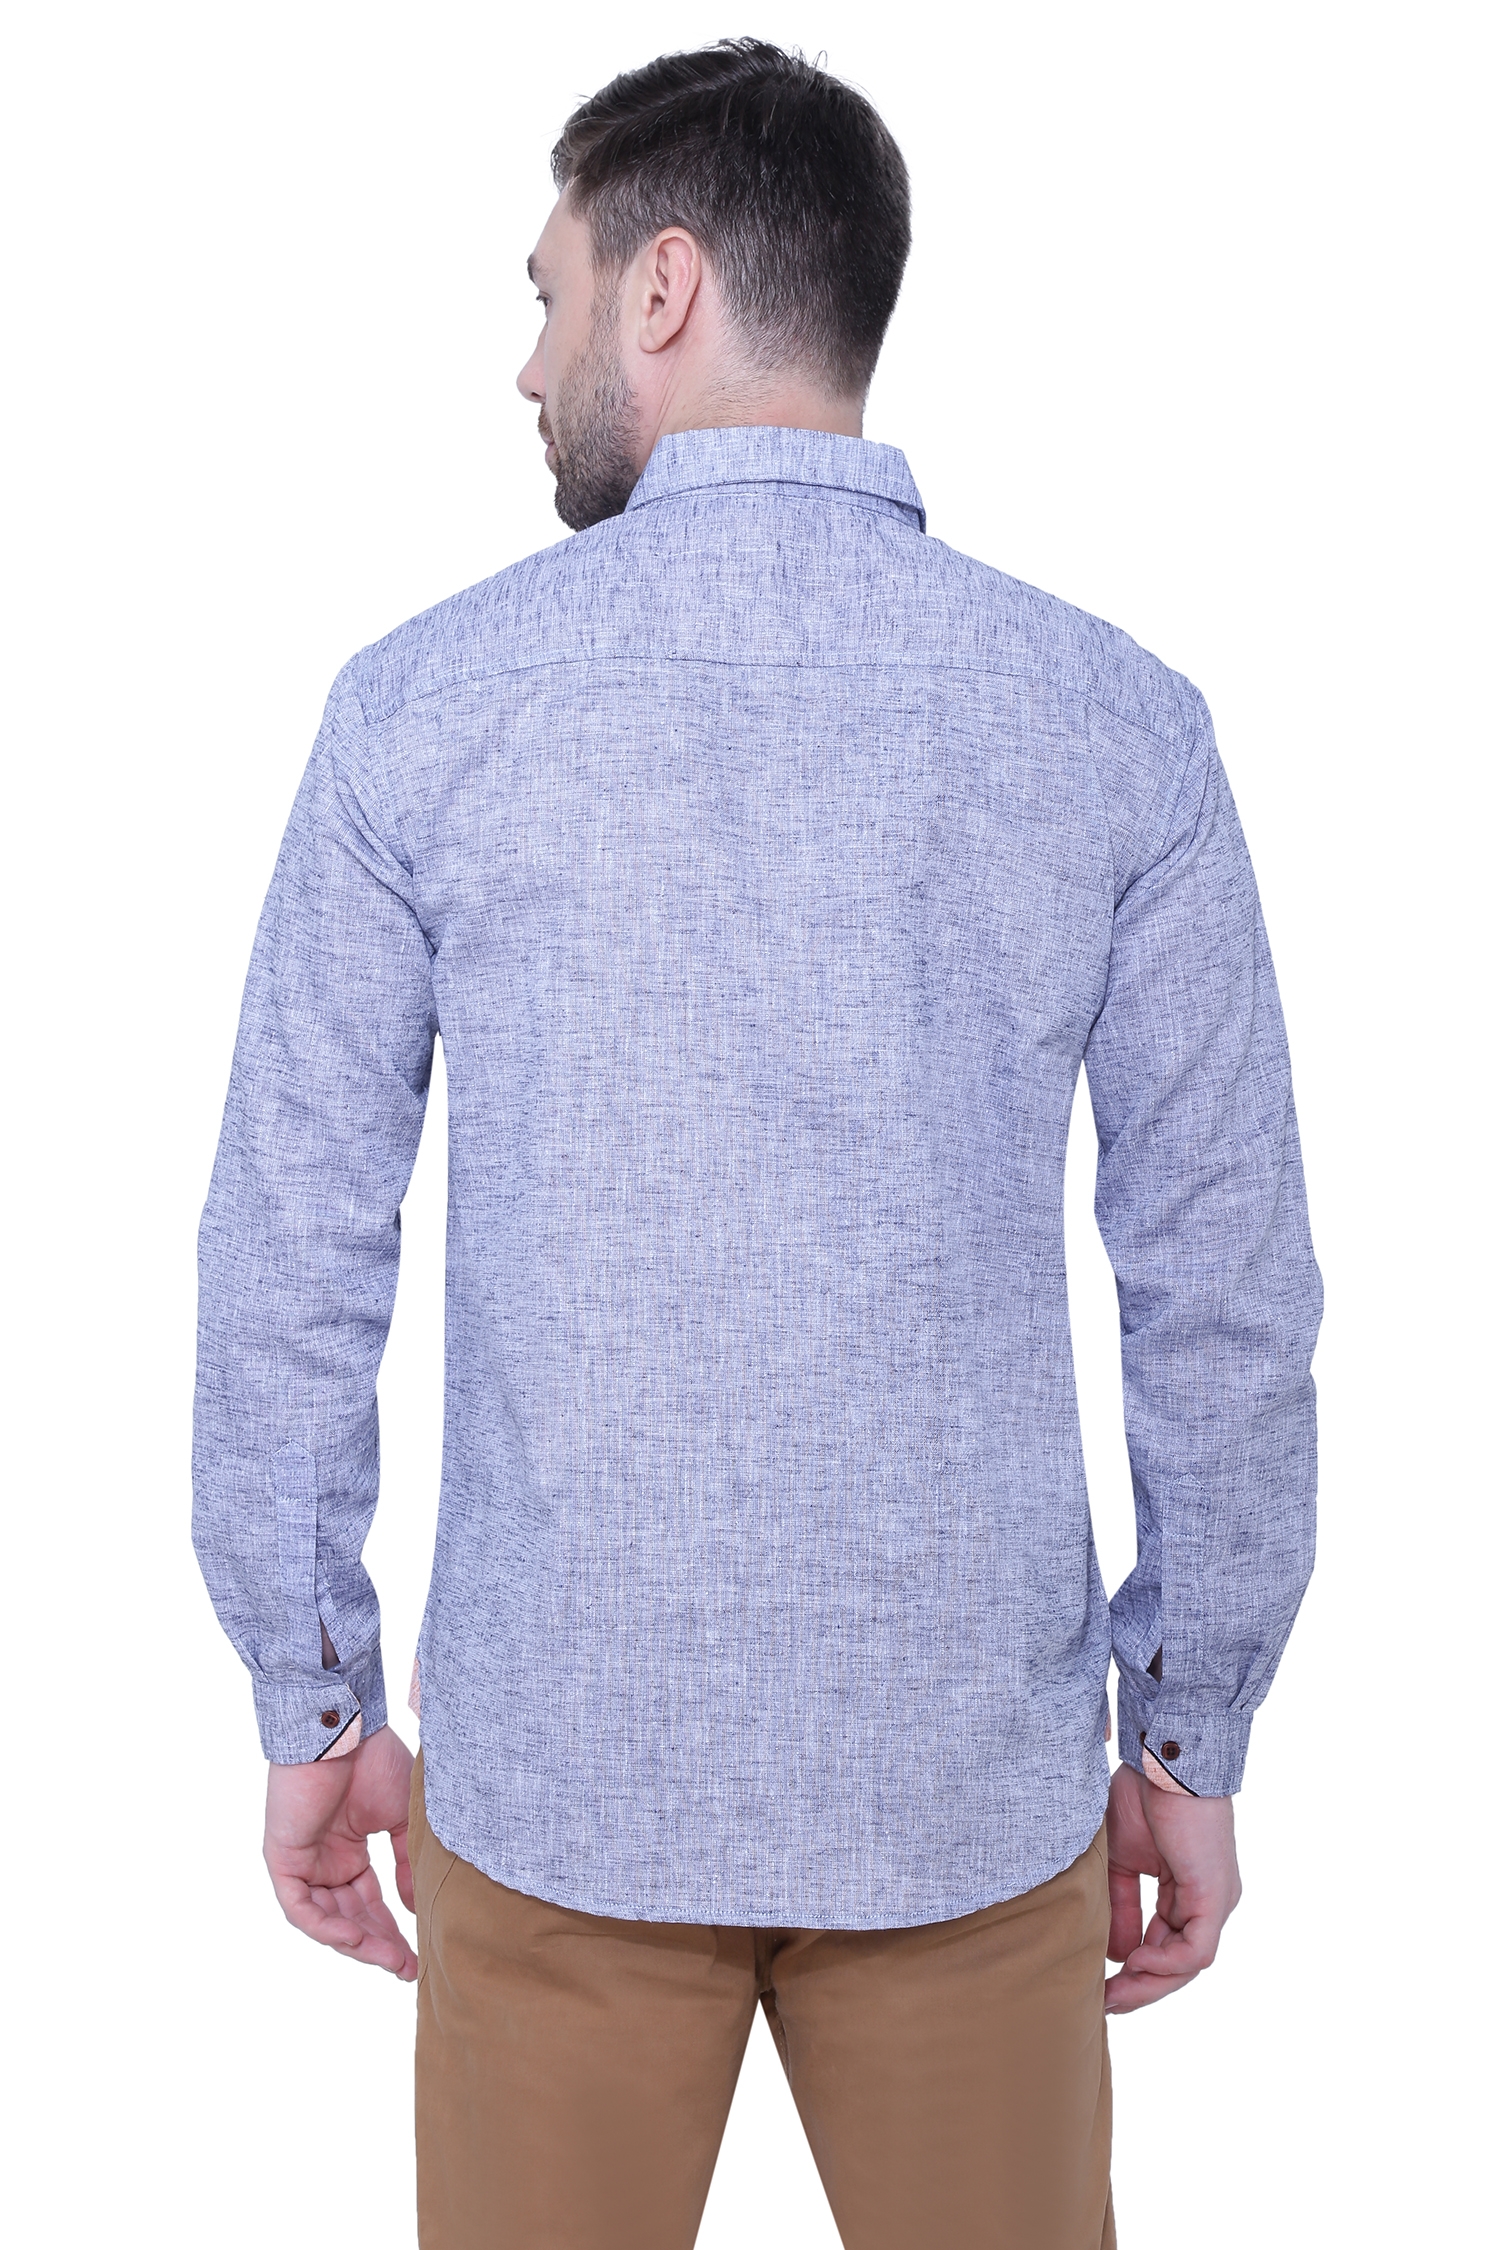 Kuons Avenue | Kuons Avenue Men's Linen Cotton Casual Shirt-KACLFS1247A 2